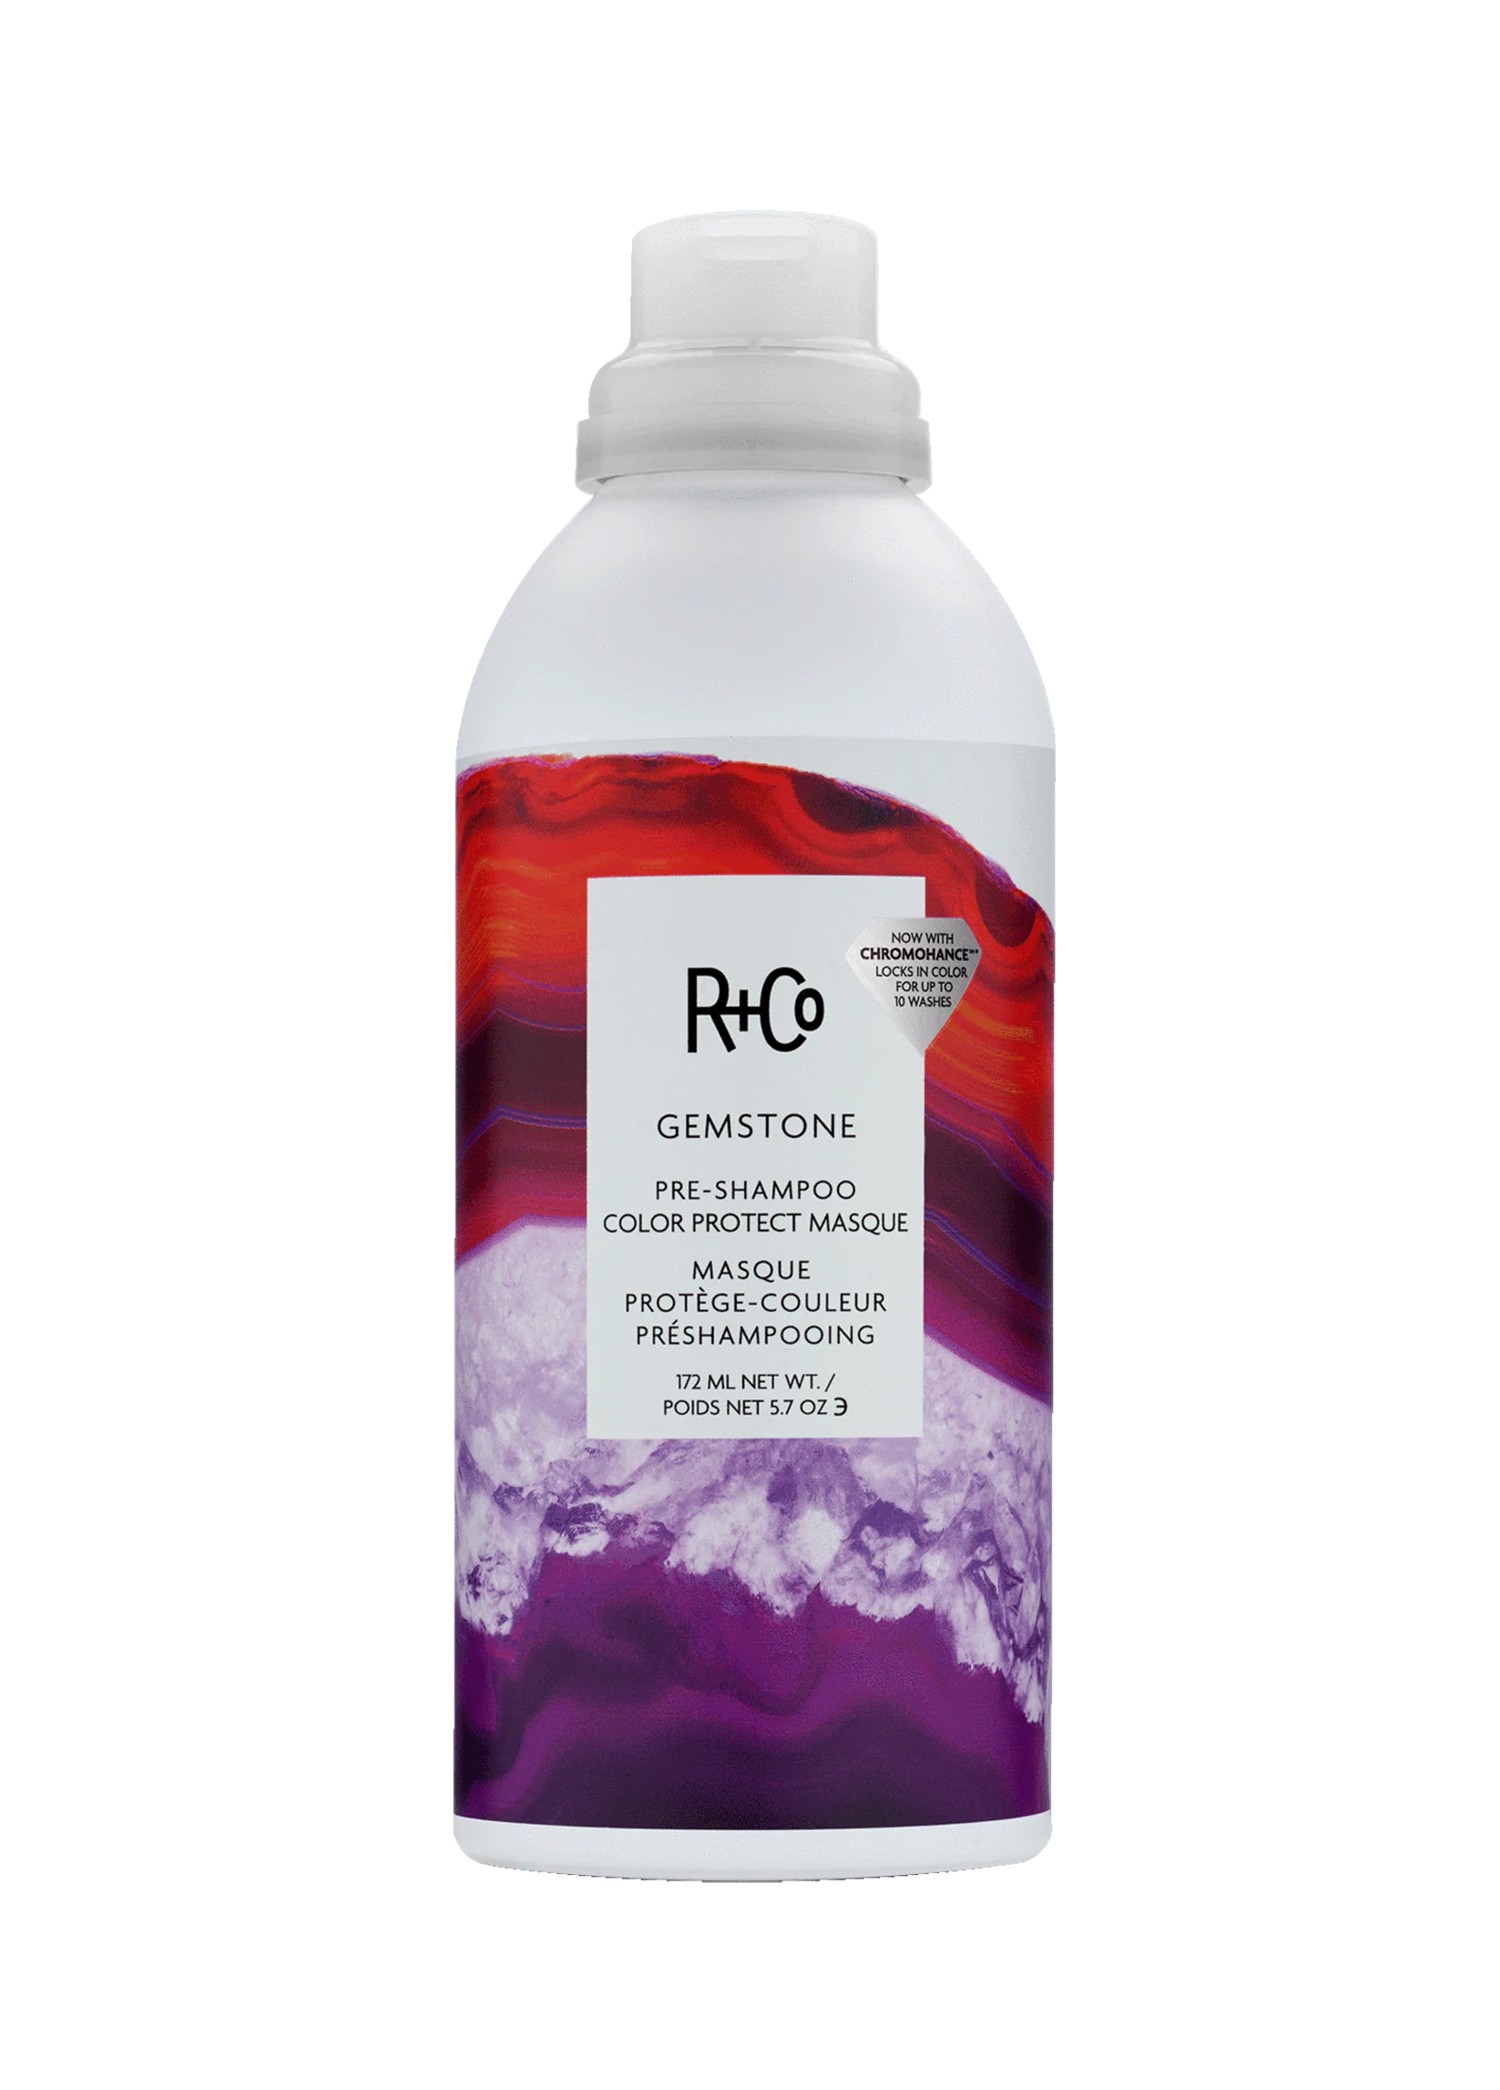 Gemstone Pre Shampoo Color Protect Masque 172 ml